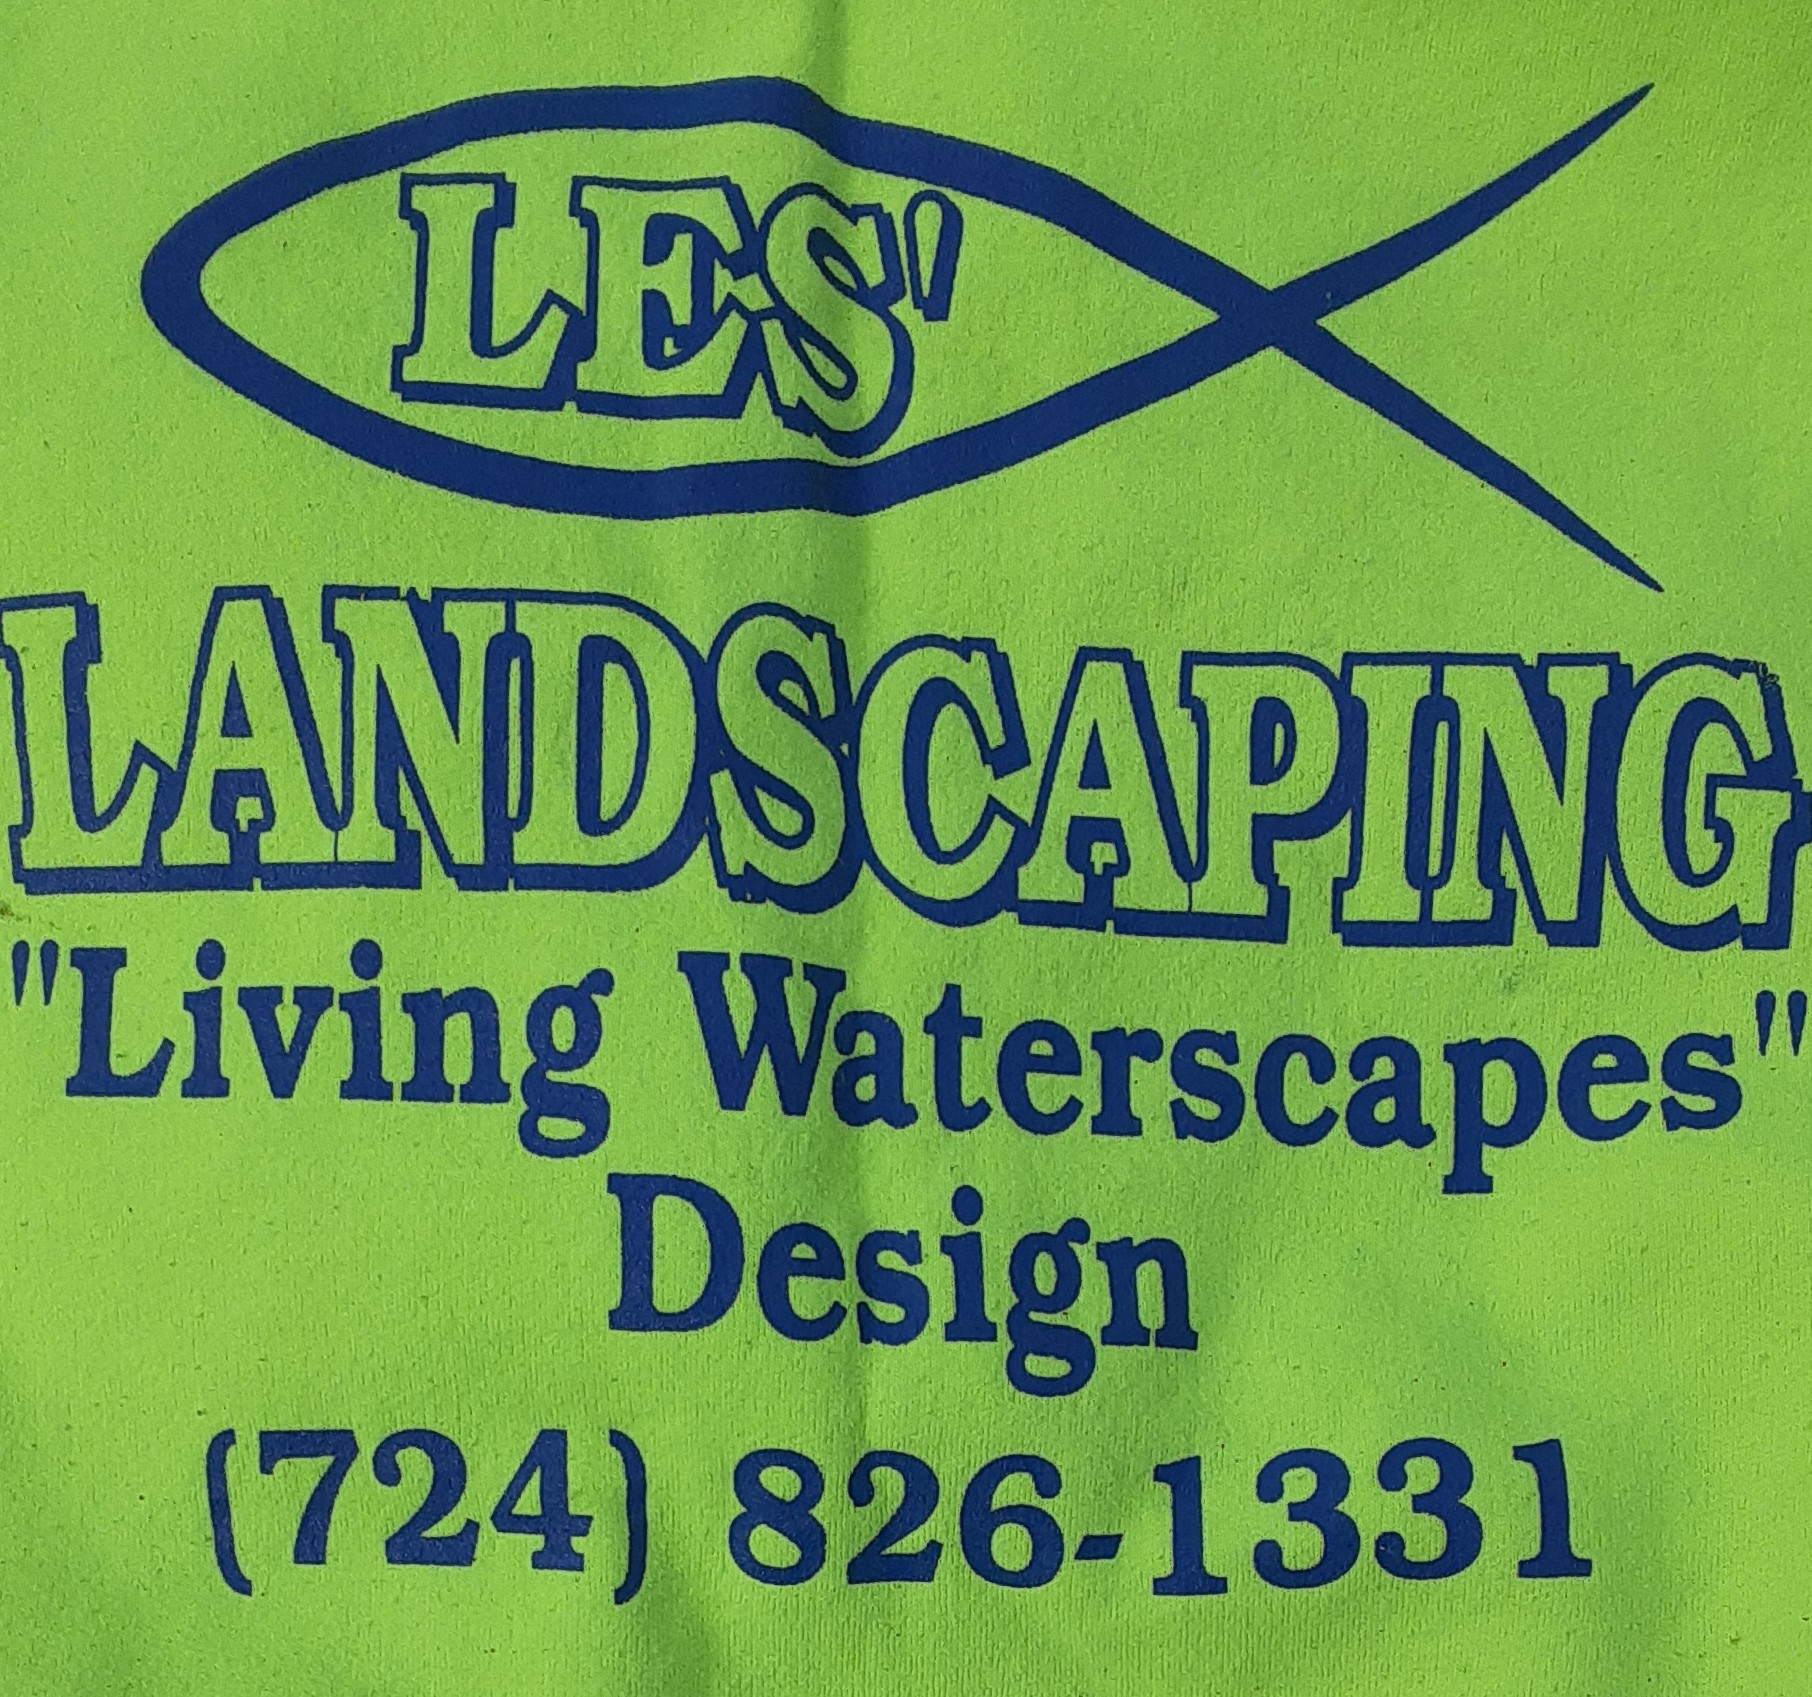 Les' Landscaping